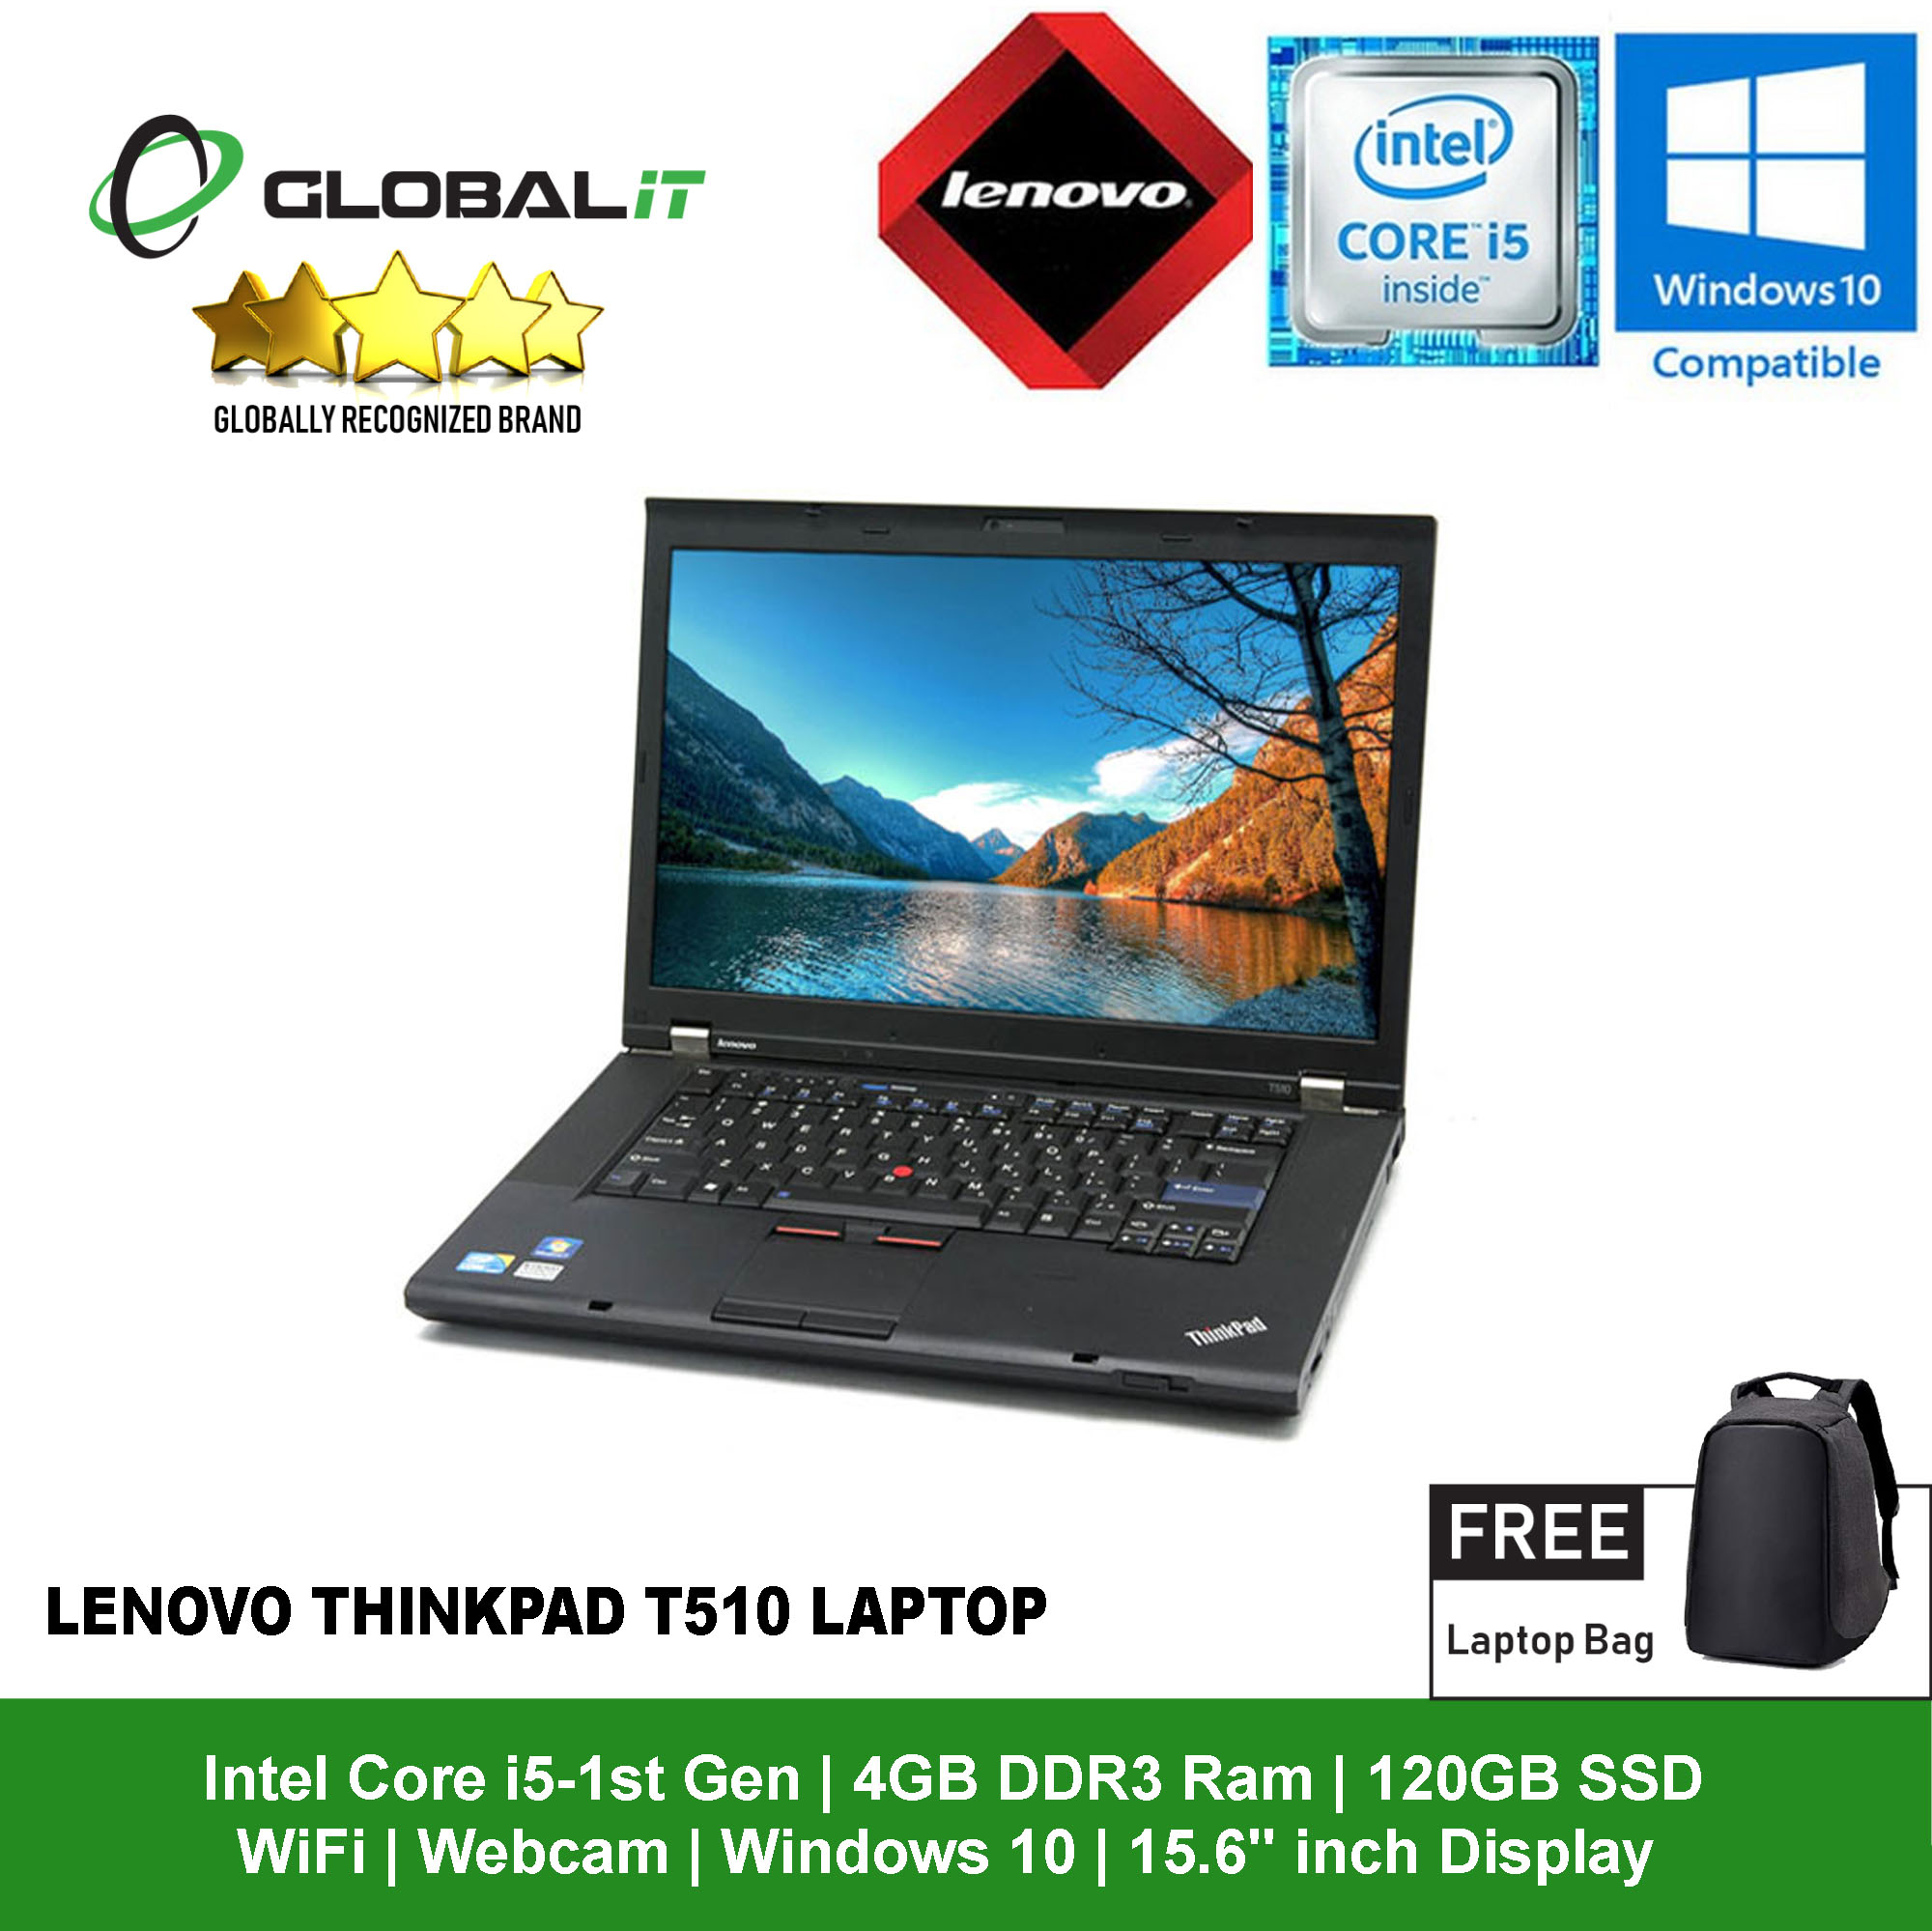 Thinkpad T510 Laptop Intel Core i5-1st Gen 15.6" Display / Windows 10 (Refurbished) - Global Group